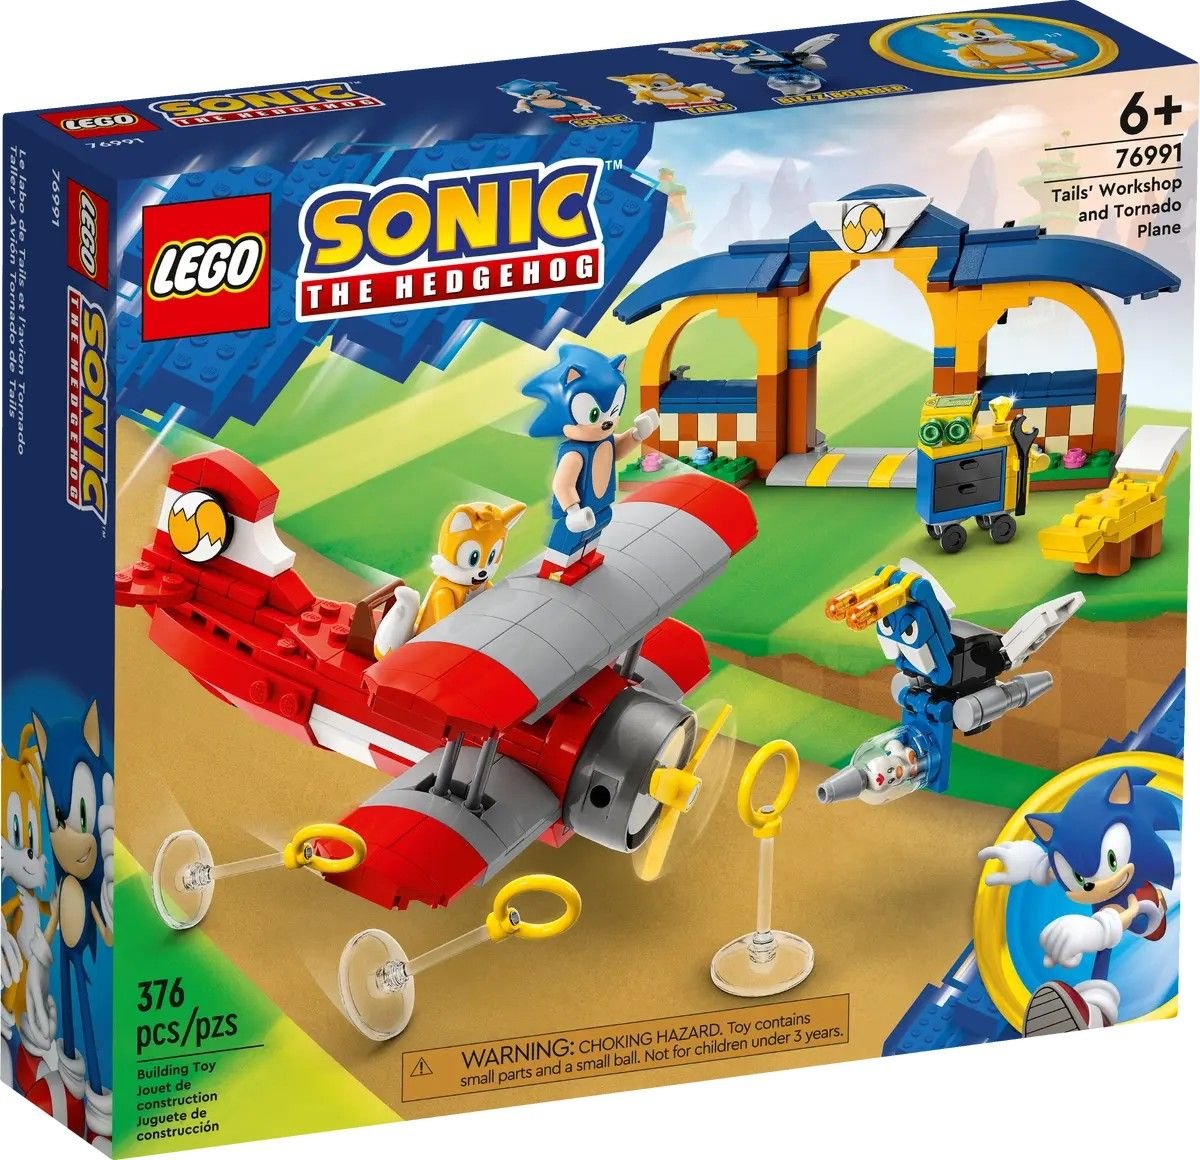 Tails' Workshop and Tornado Plane LEGO Sonic the Hedgehog 76991